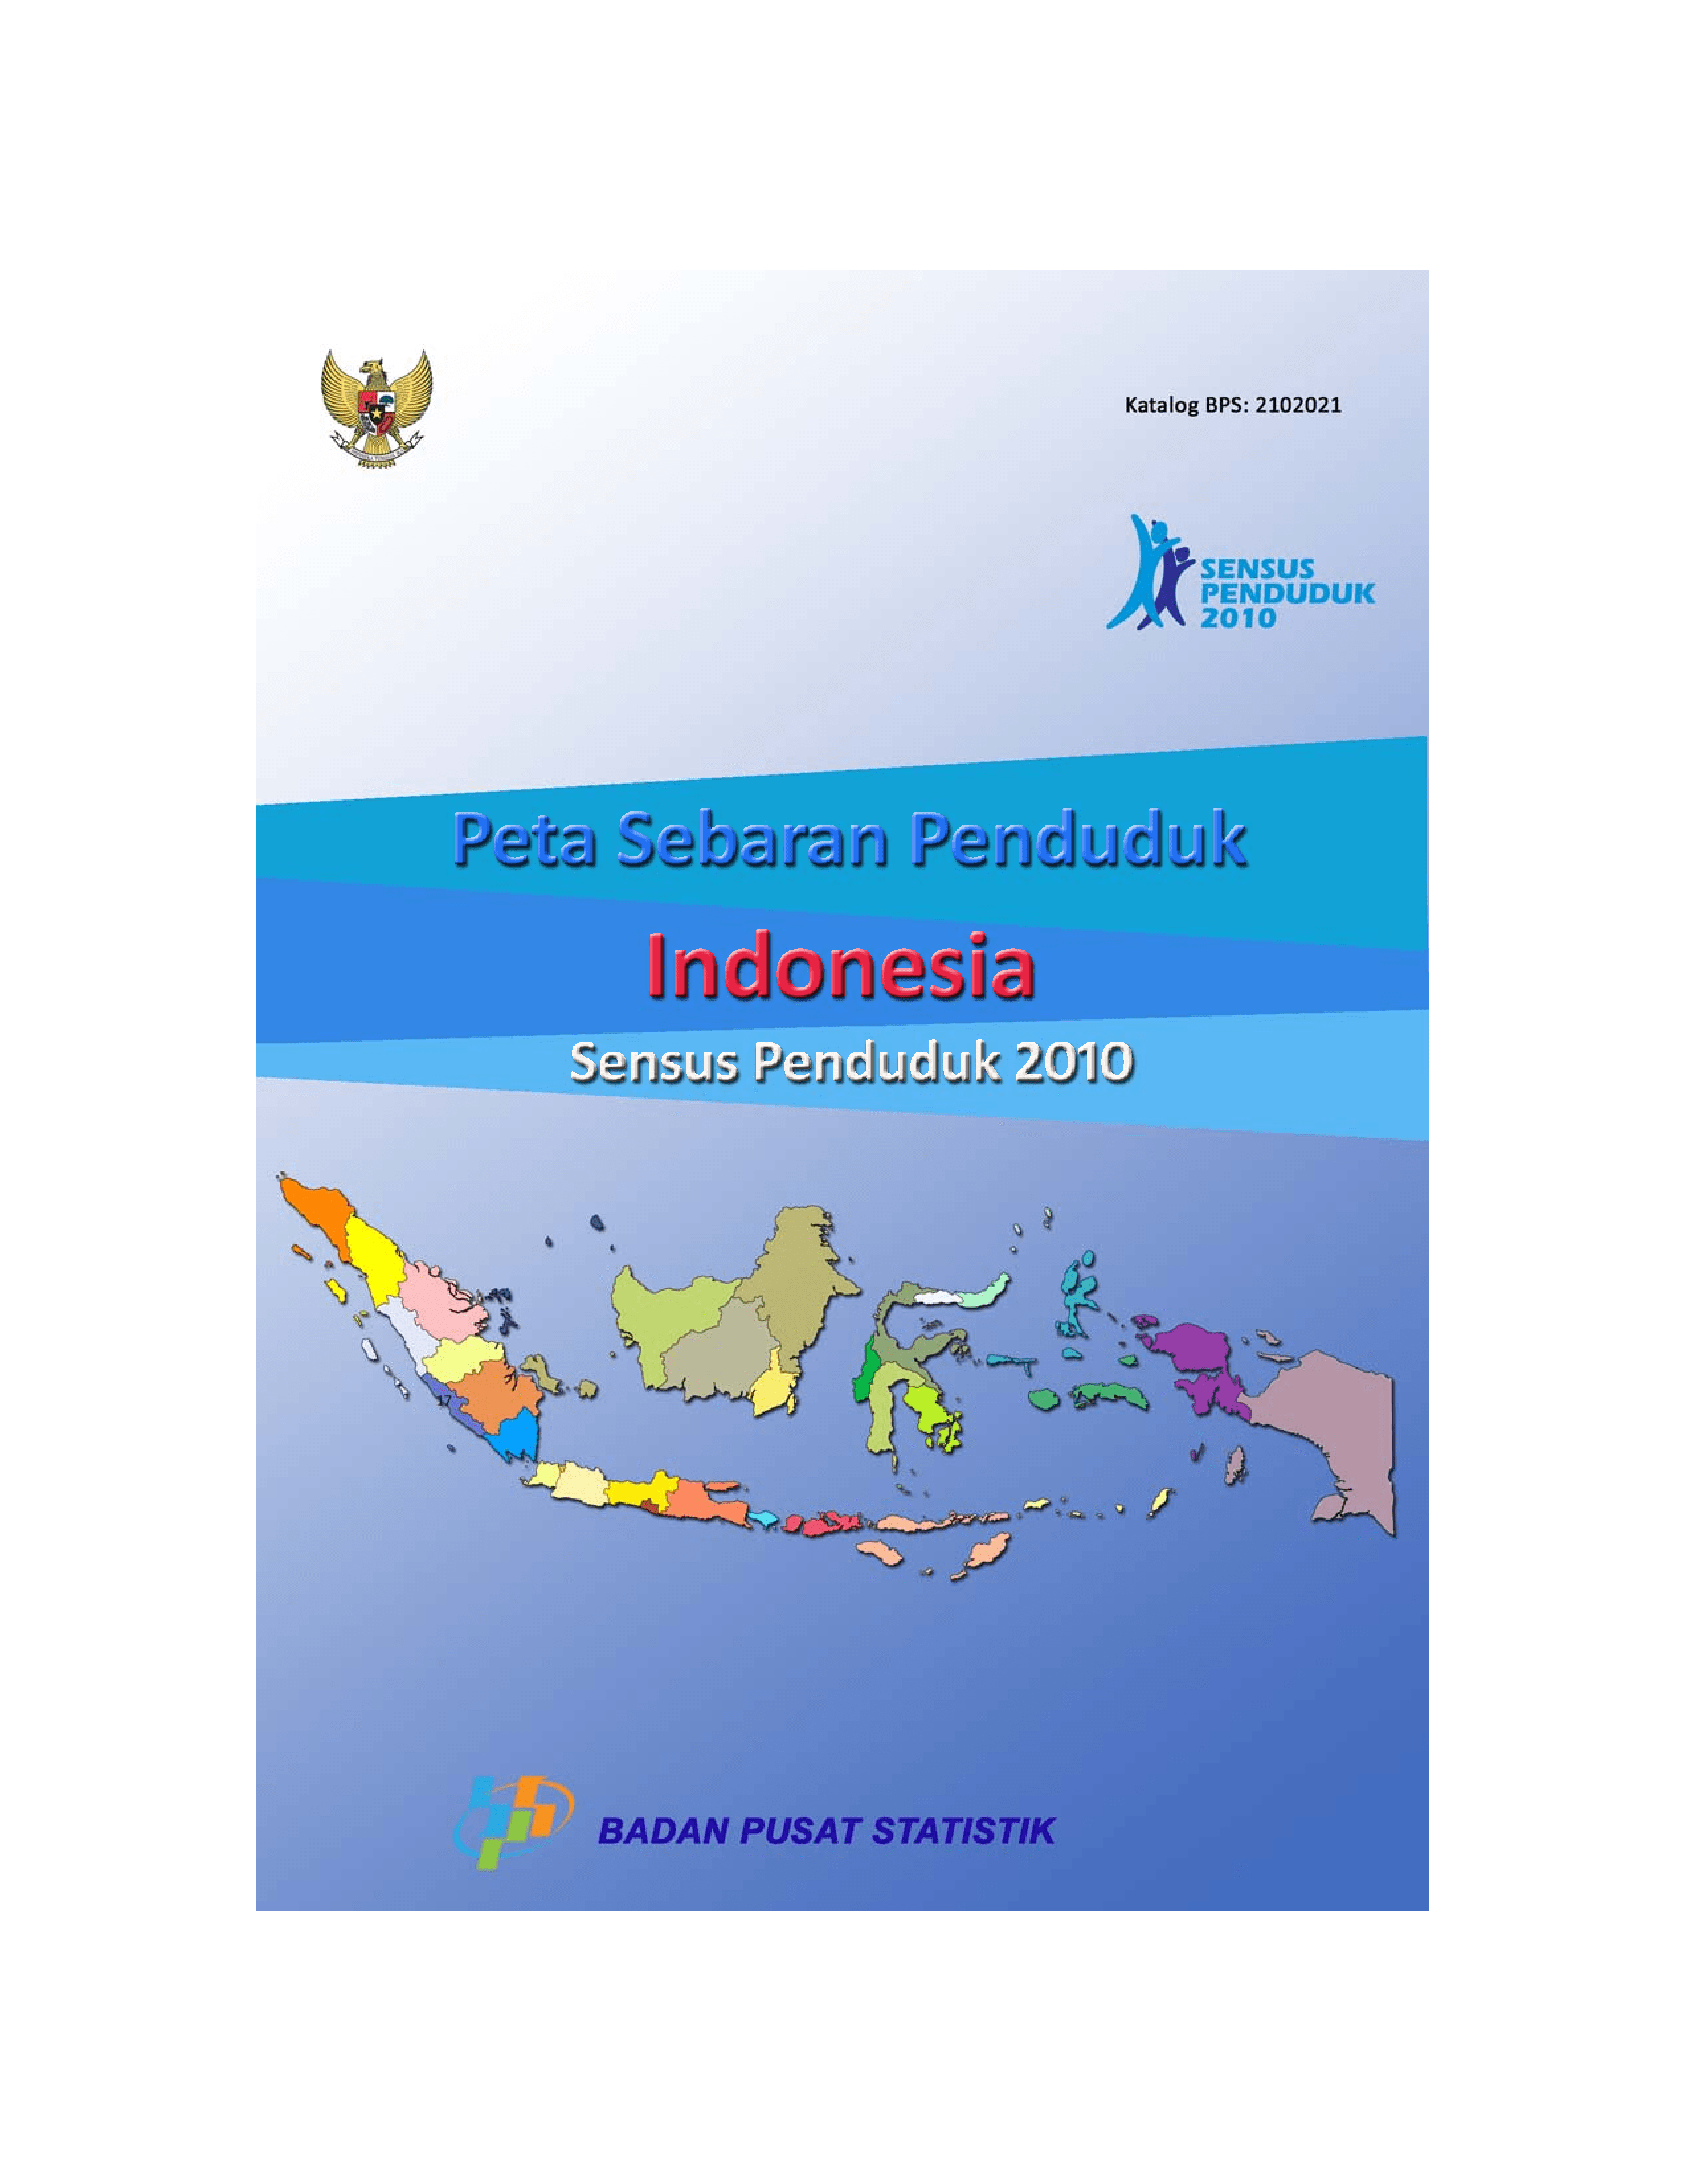 Indonesia Population Distribution Publication Population Census
2010